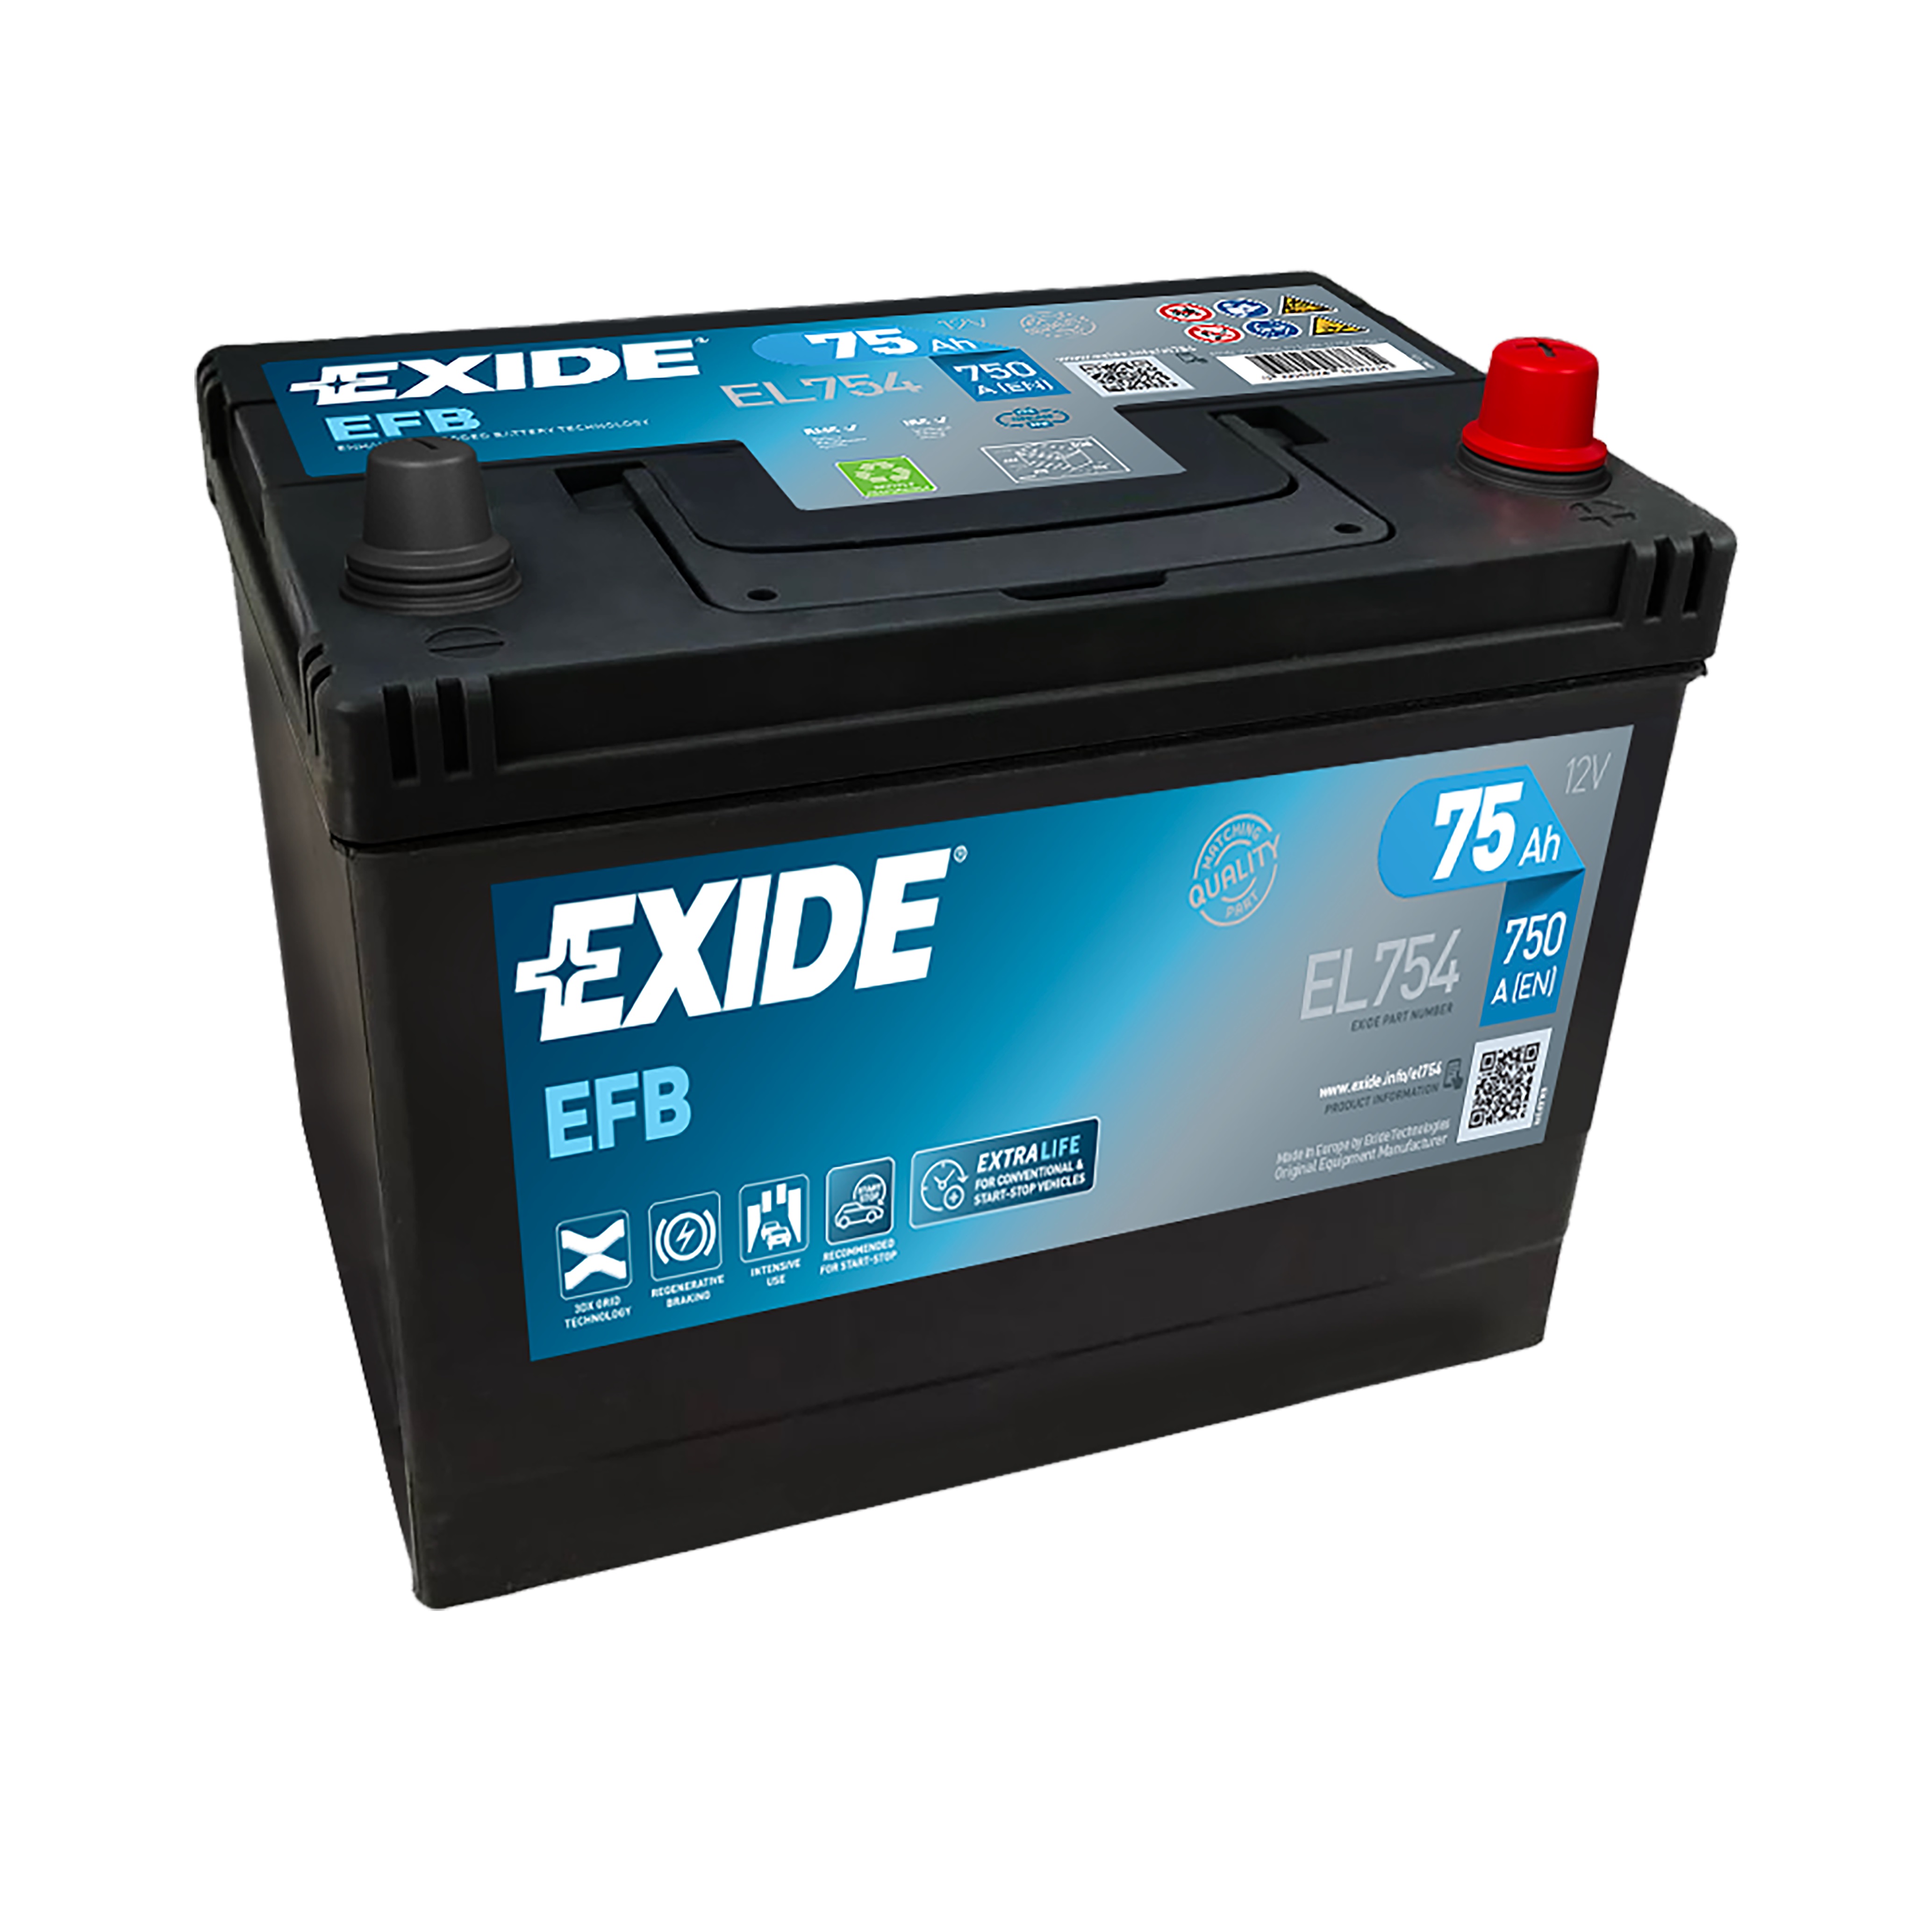 Exide, Erweiterung EFB Batterie-Sortiment